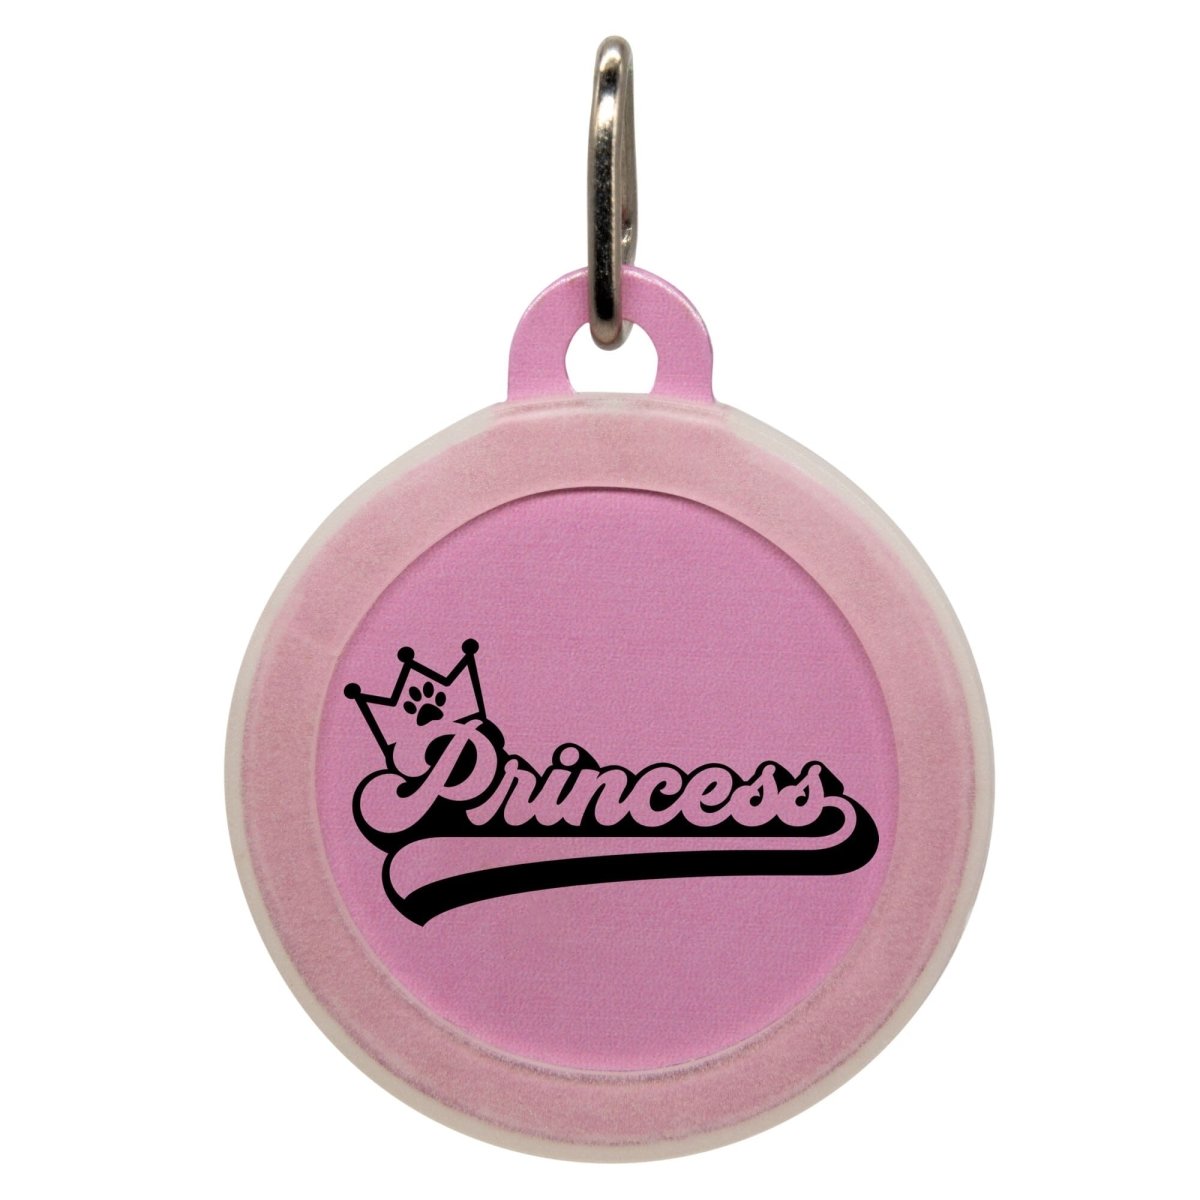 Princess Name Tag - Oh My Paw'd